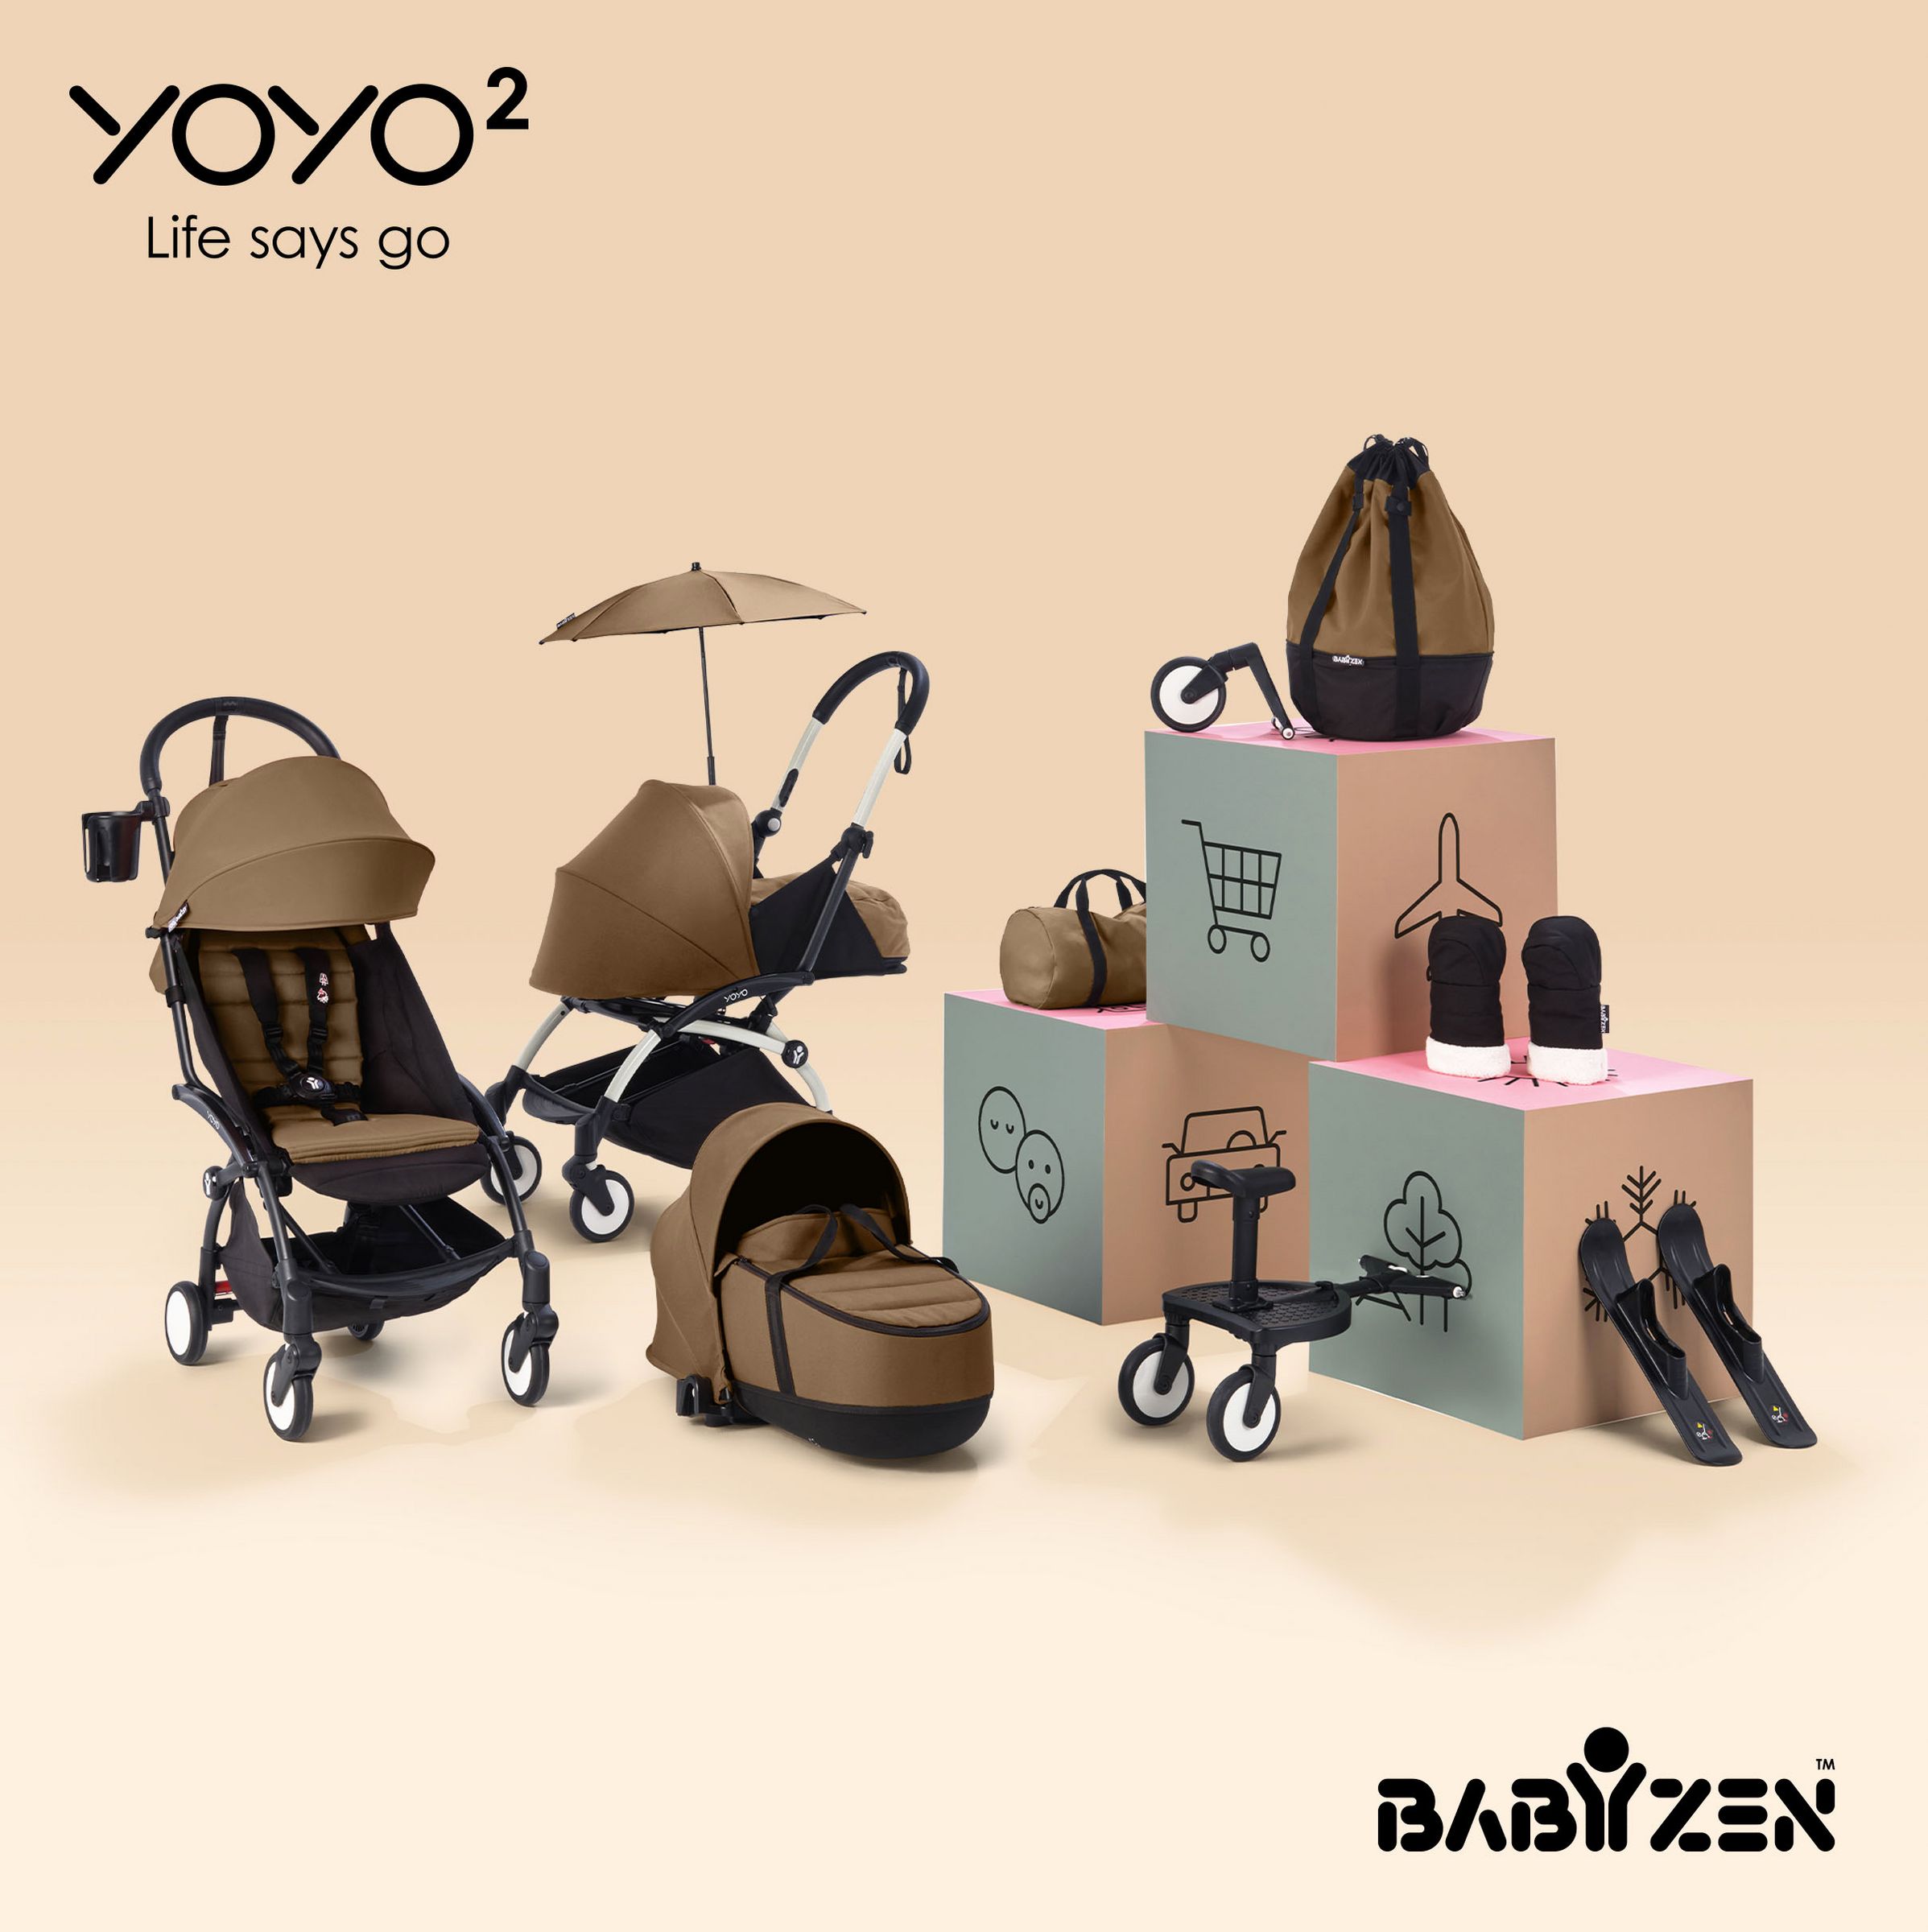 YOYO2 Stroller by Babyzen